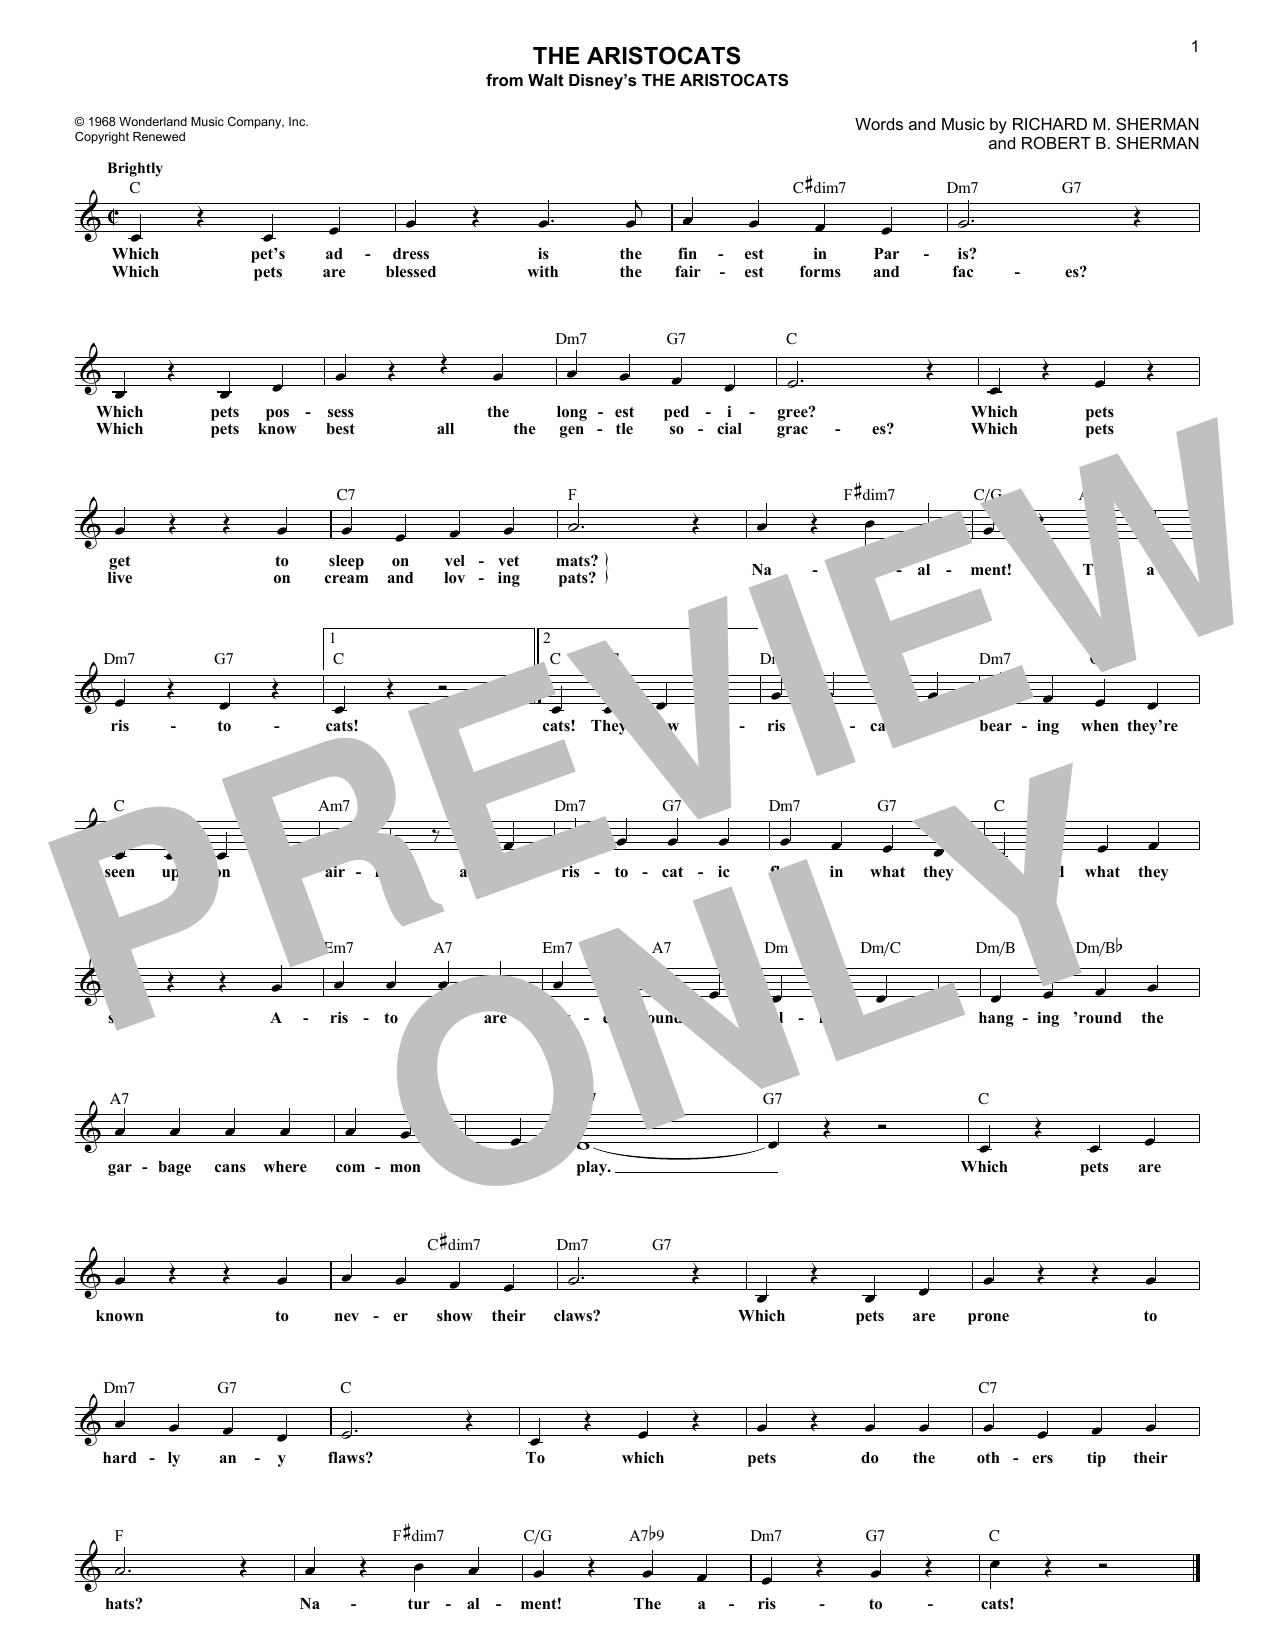 Richard M. Sherman The Aristocats Sheet Music Notes & Chords for Melody Line, Lyrics & Chords - Download or Print PDF